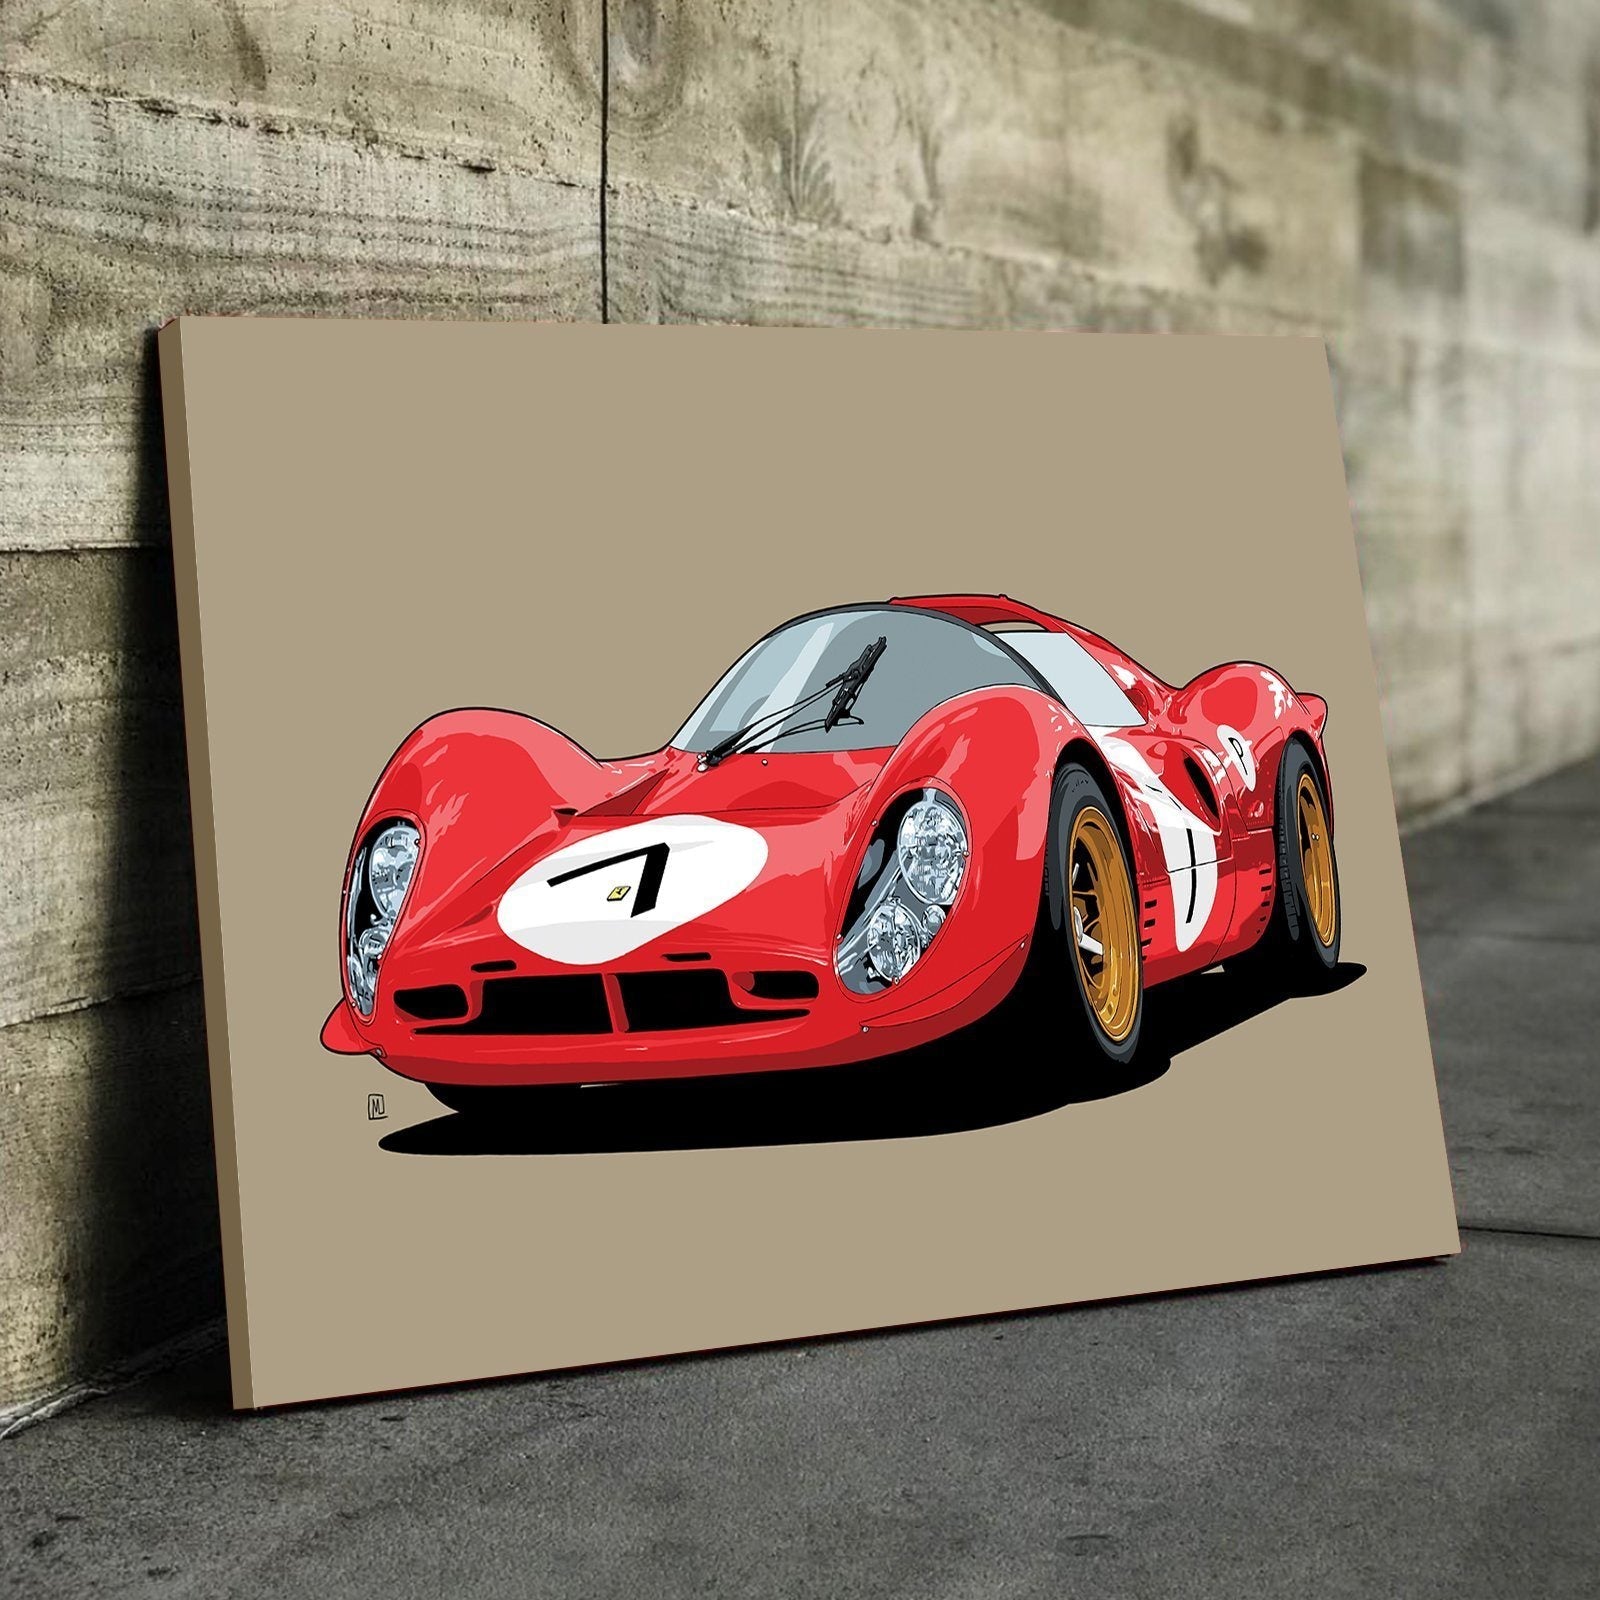 Ferrari 330 P4 Wall Art